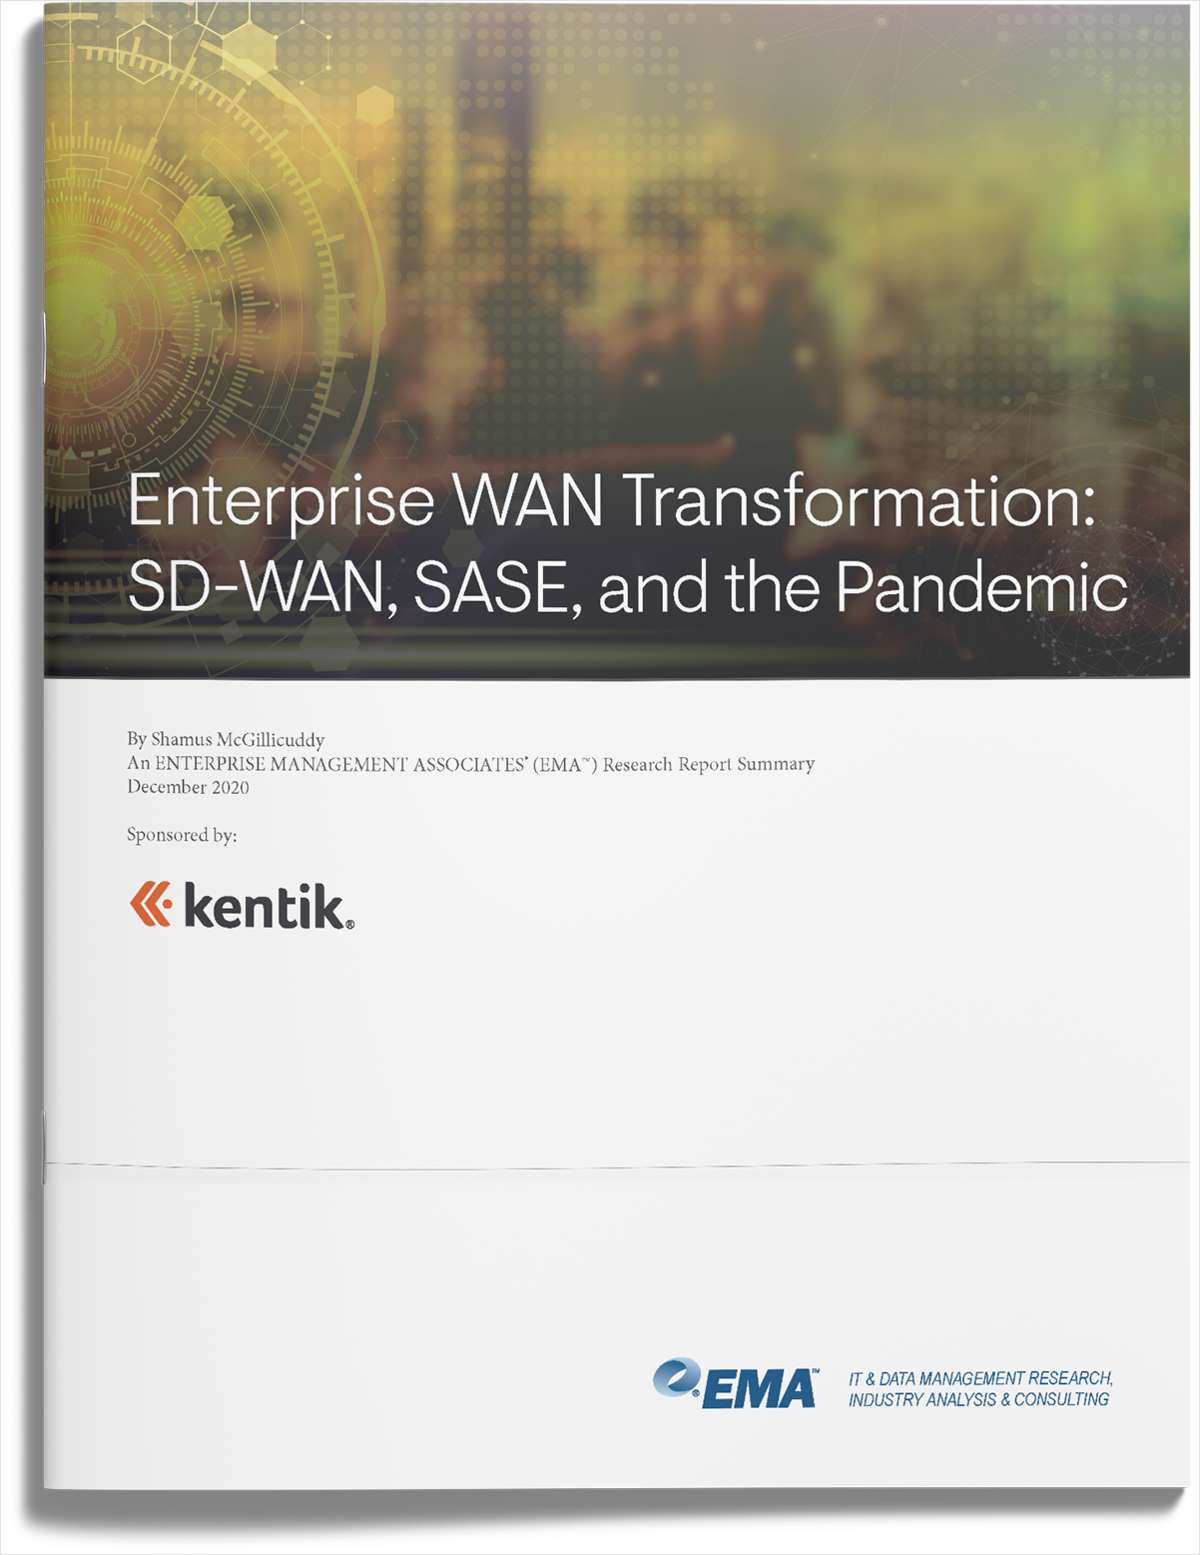 Enterprise WAN Transformation: SD-WAN, SASE, and the Pandemic